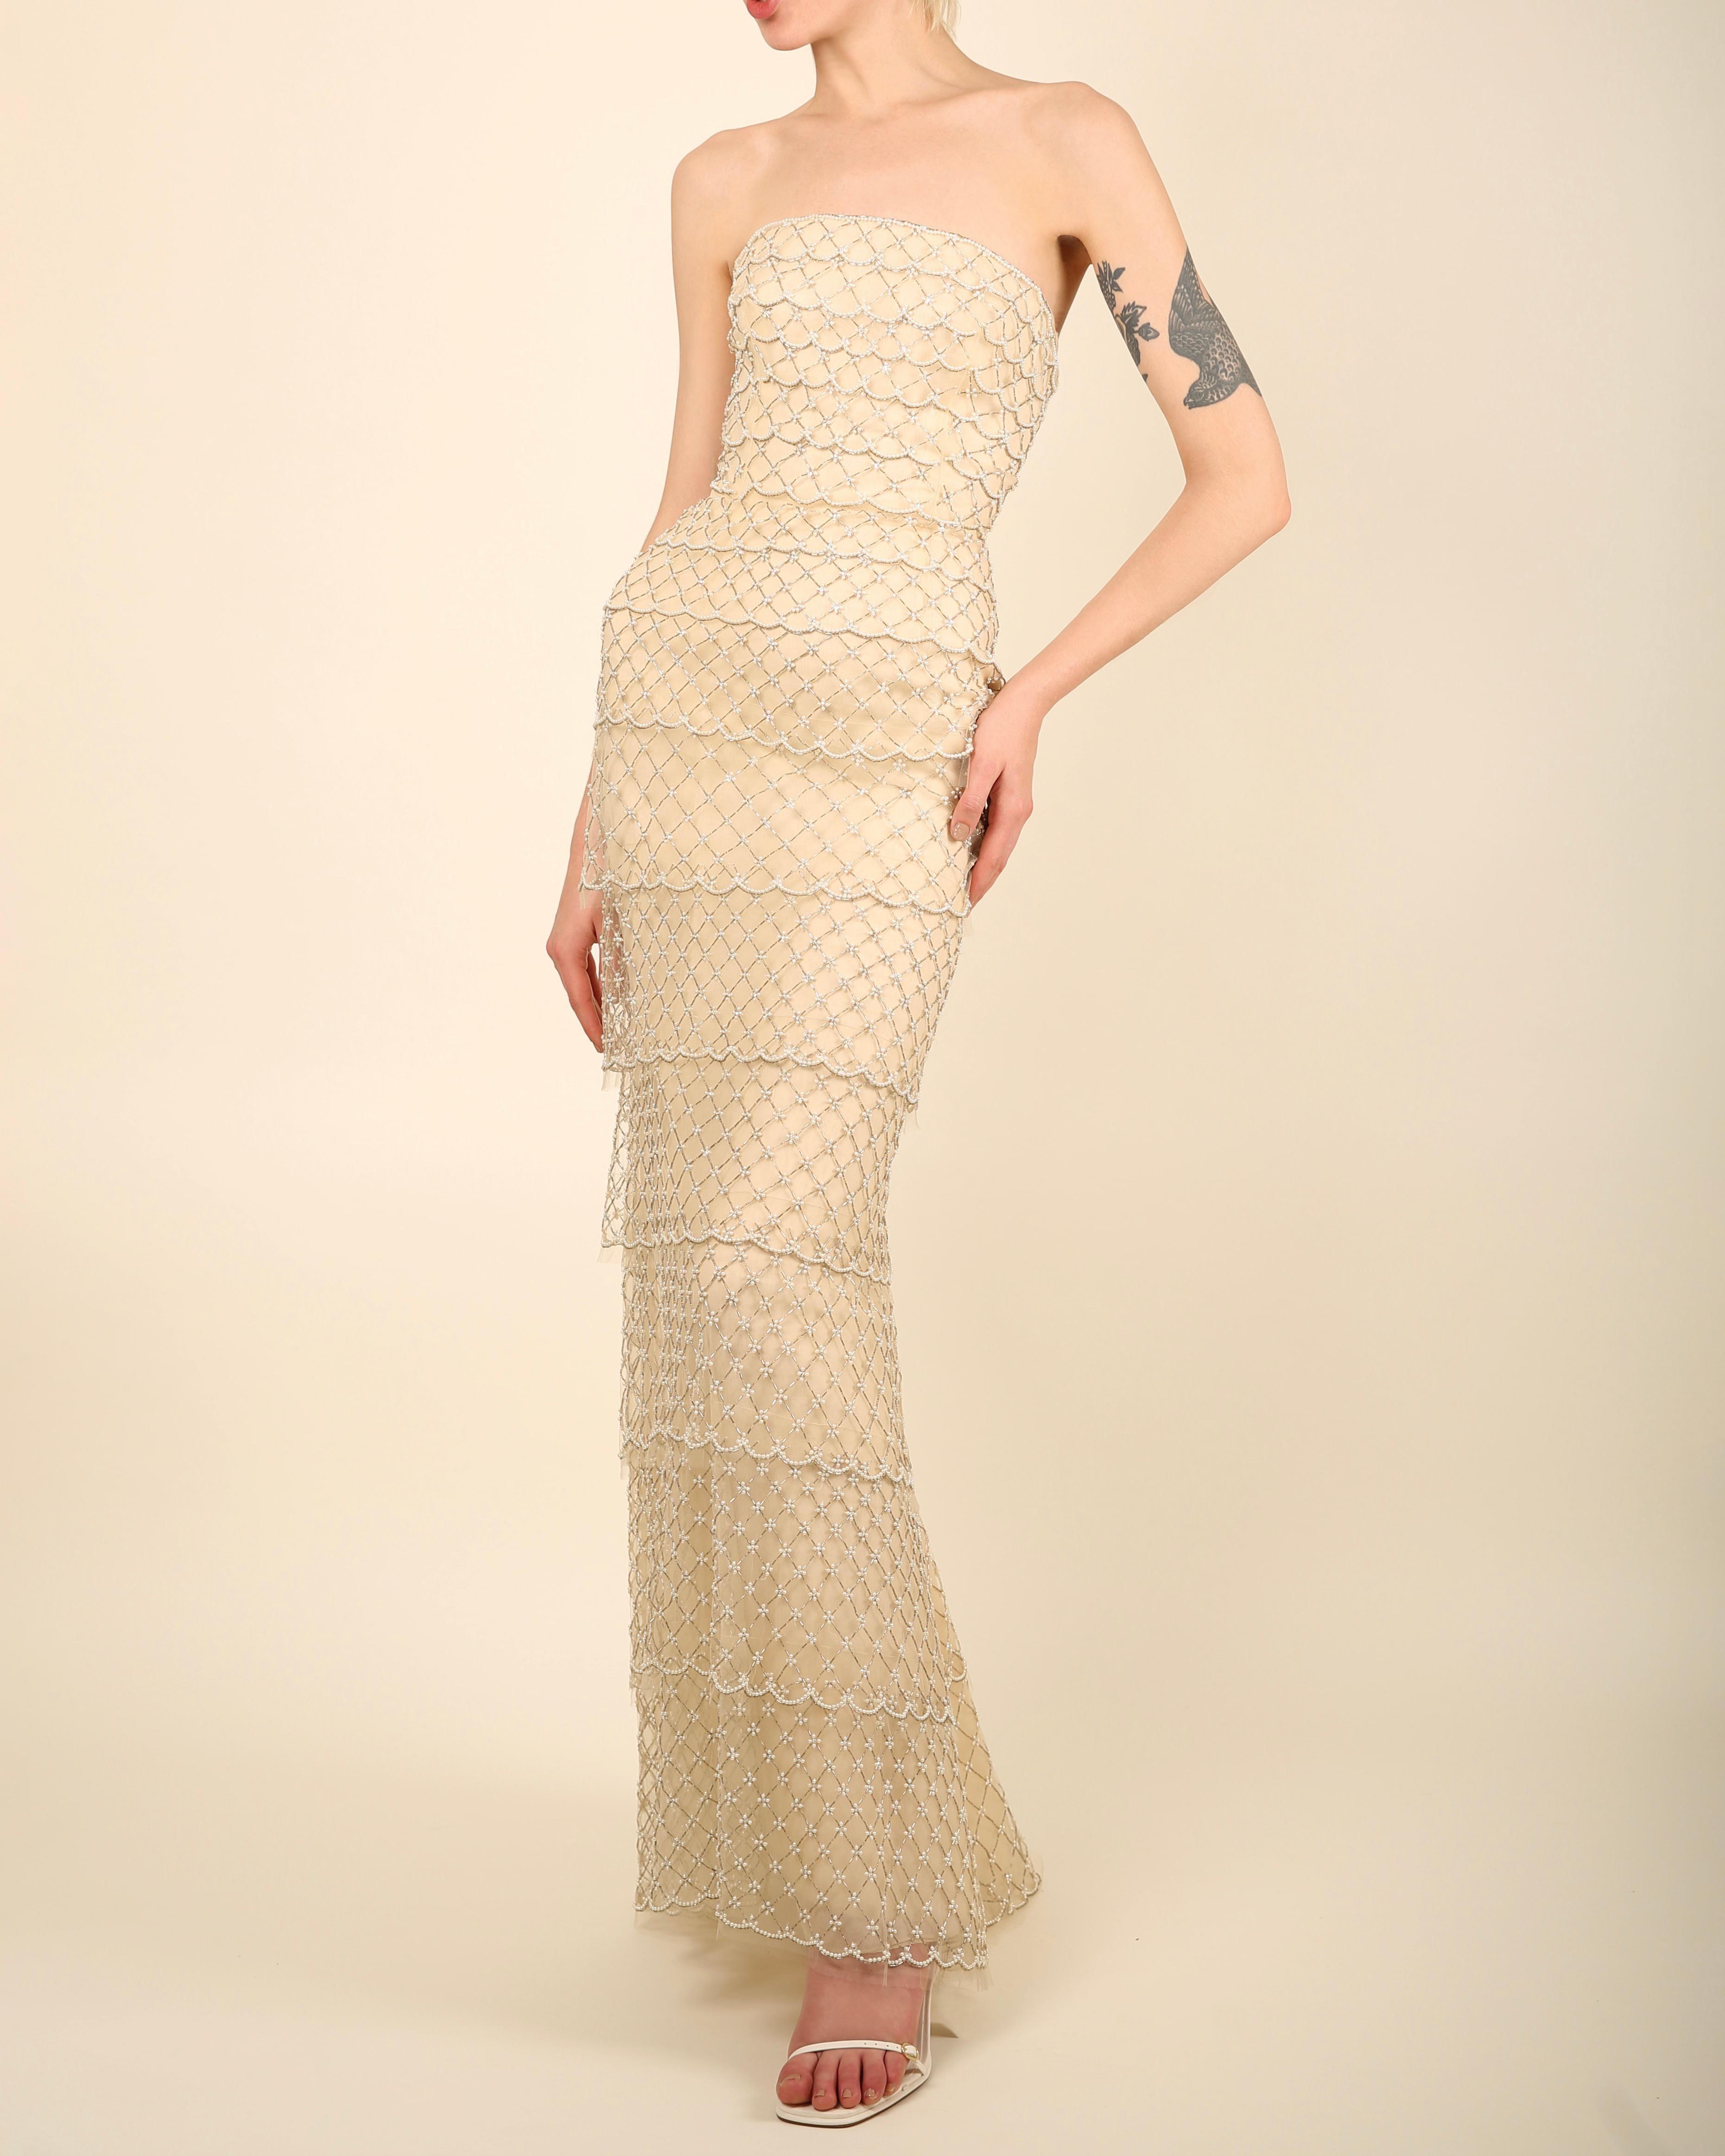 Oscar de la Renta S/S 2014 strapless tiered sheer mesh pearl wedding dress gown For Sale 2